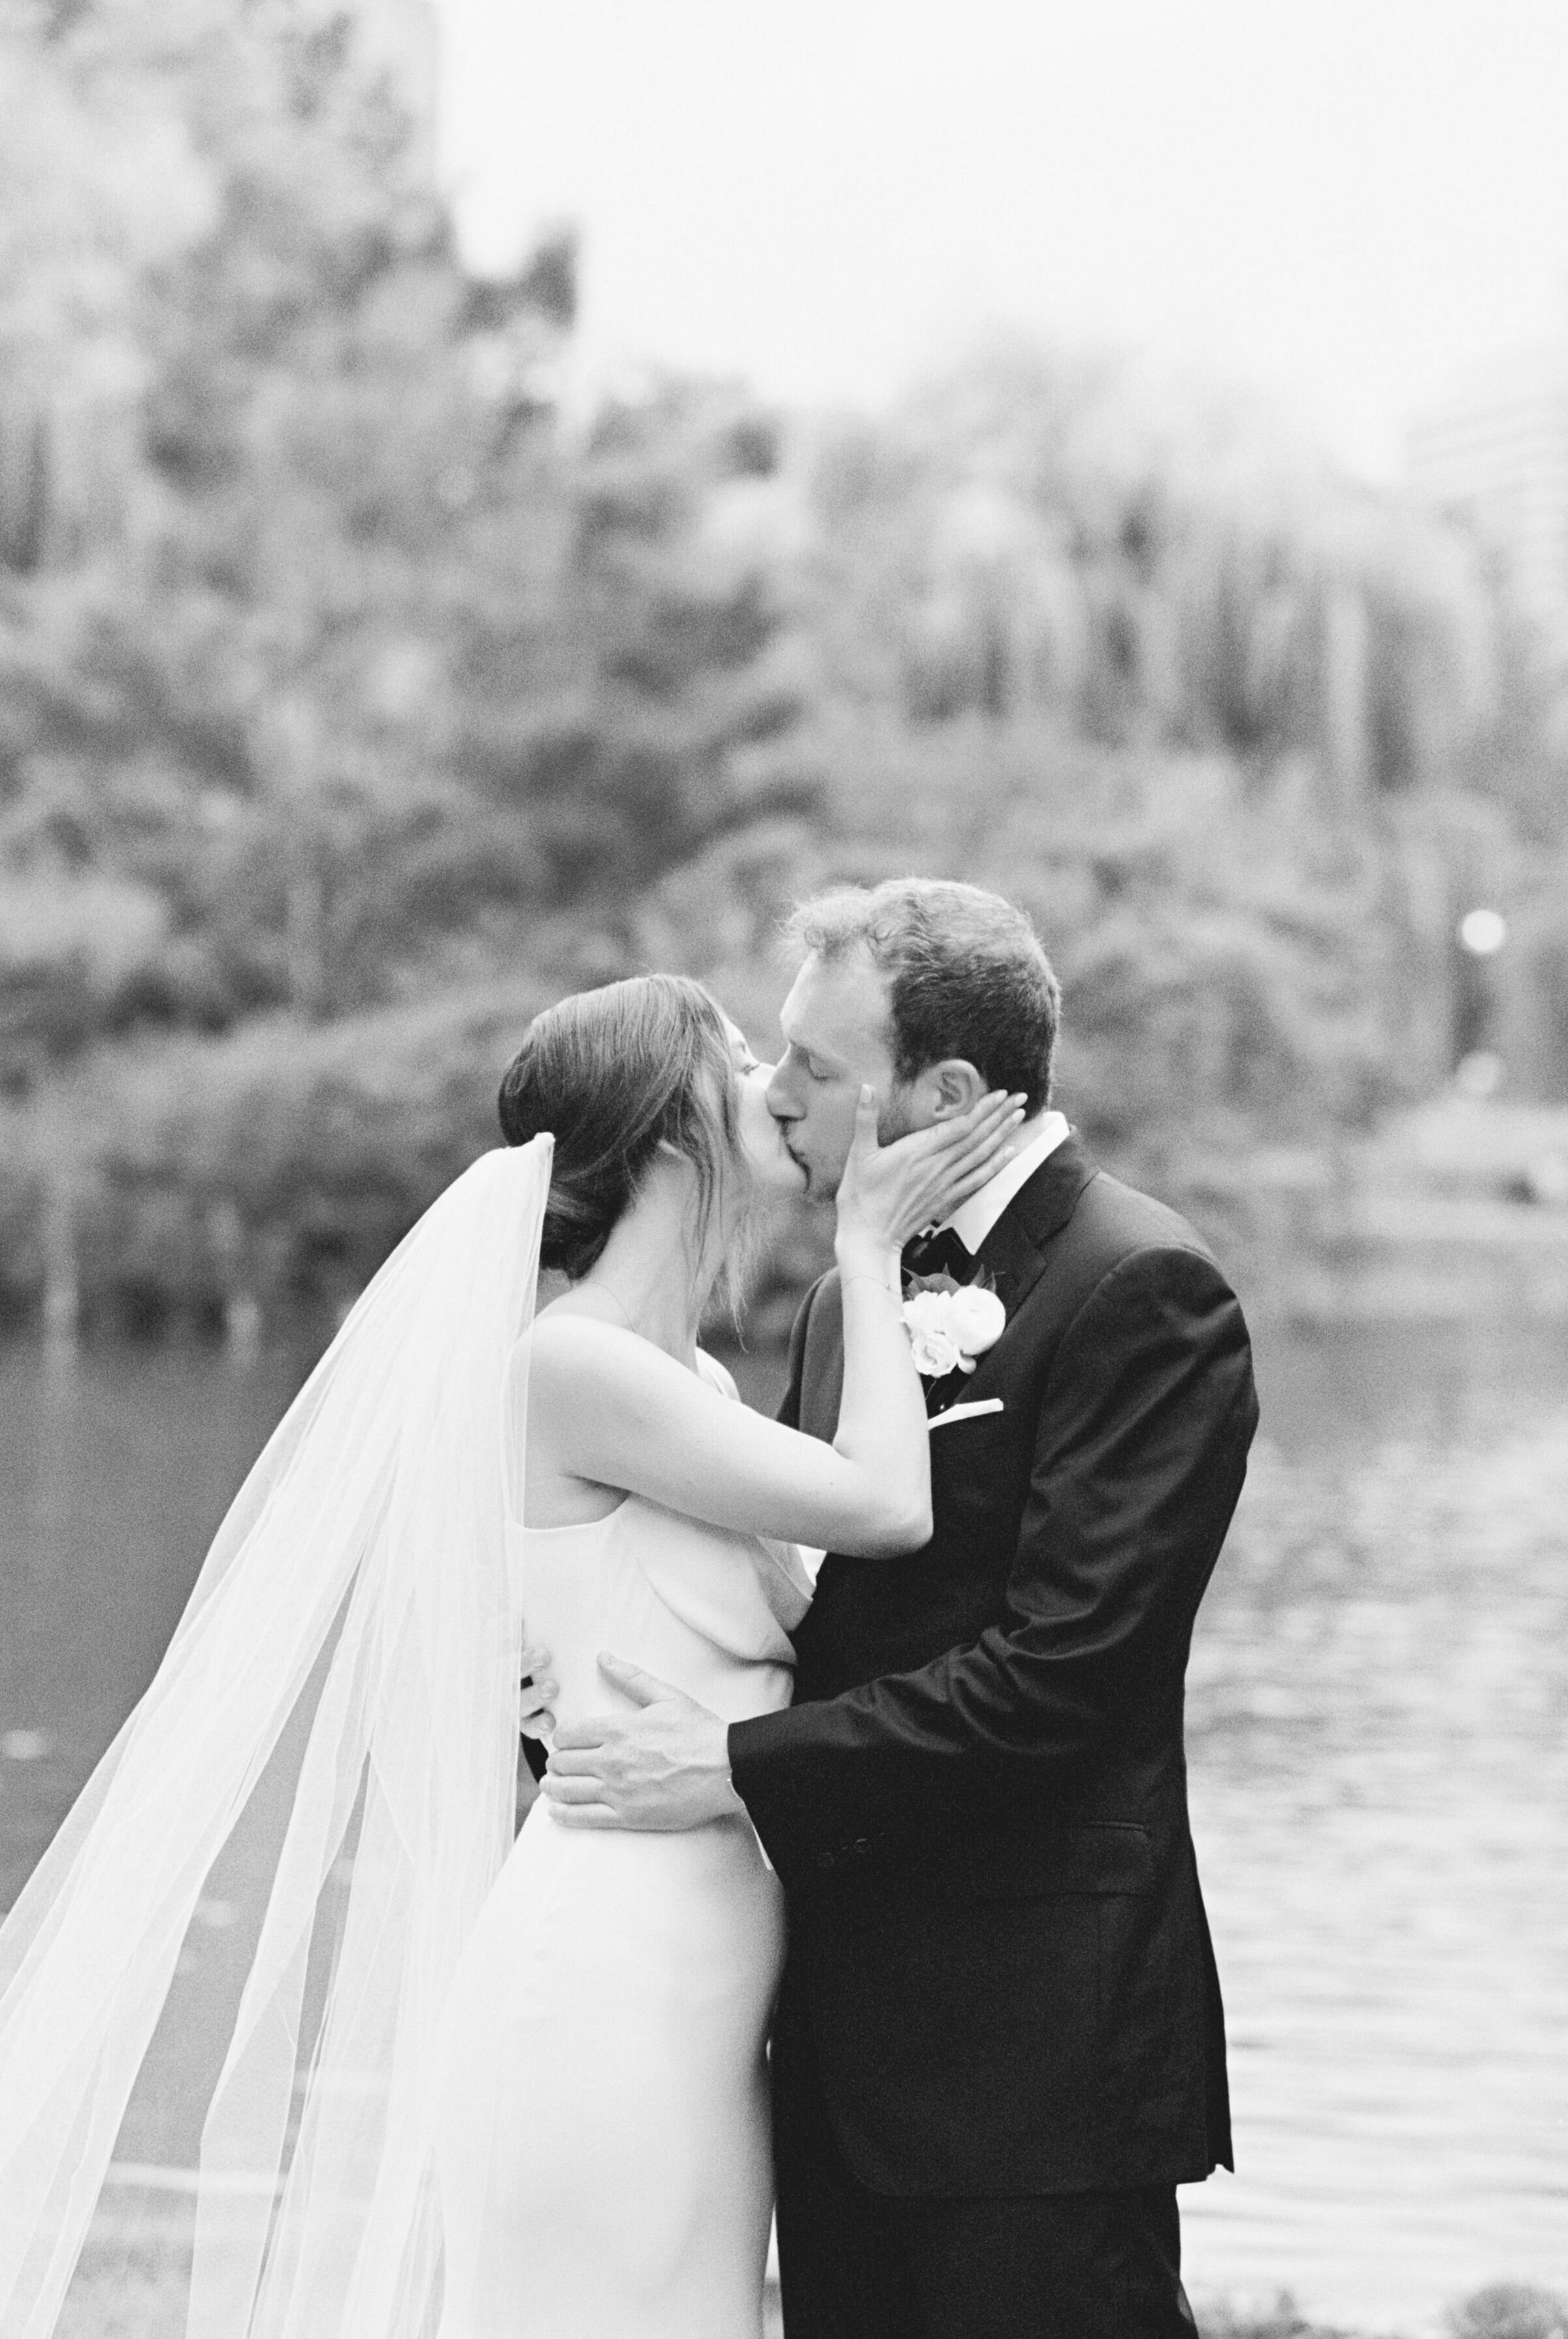 Boston newlyweds kiss in the Boston Public Garden for Boston Wedding photographer Lynne Reznick